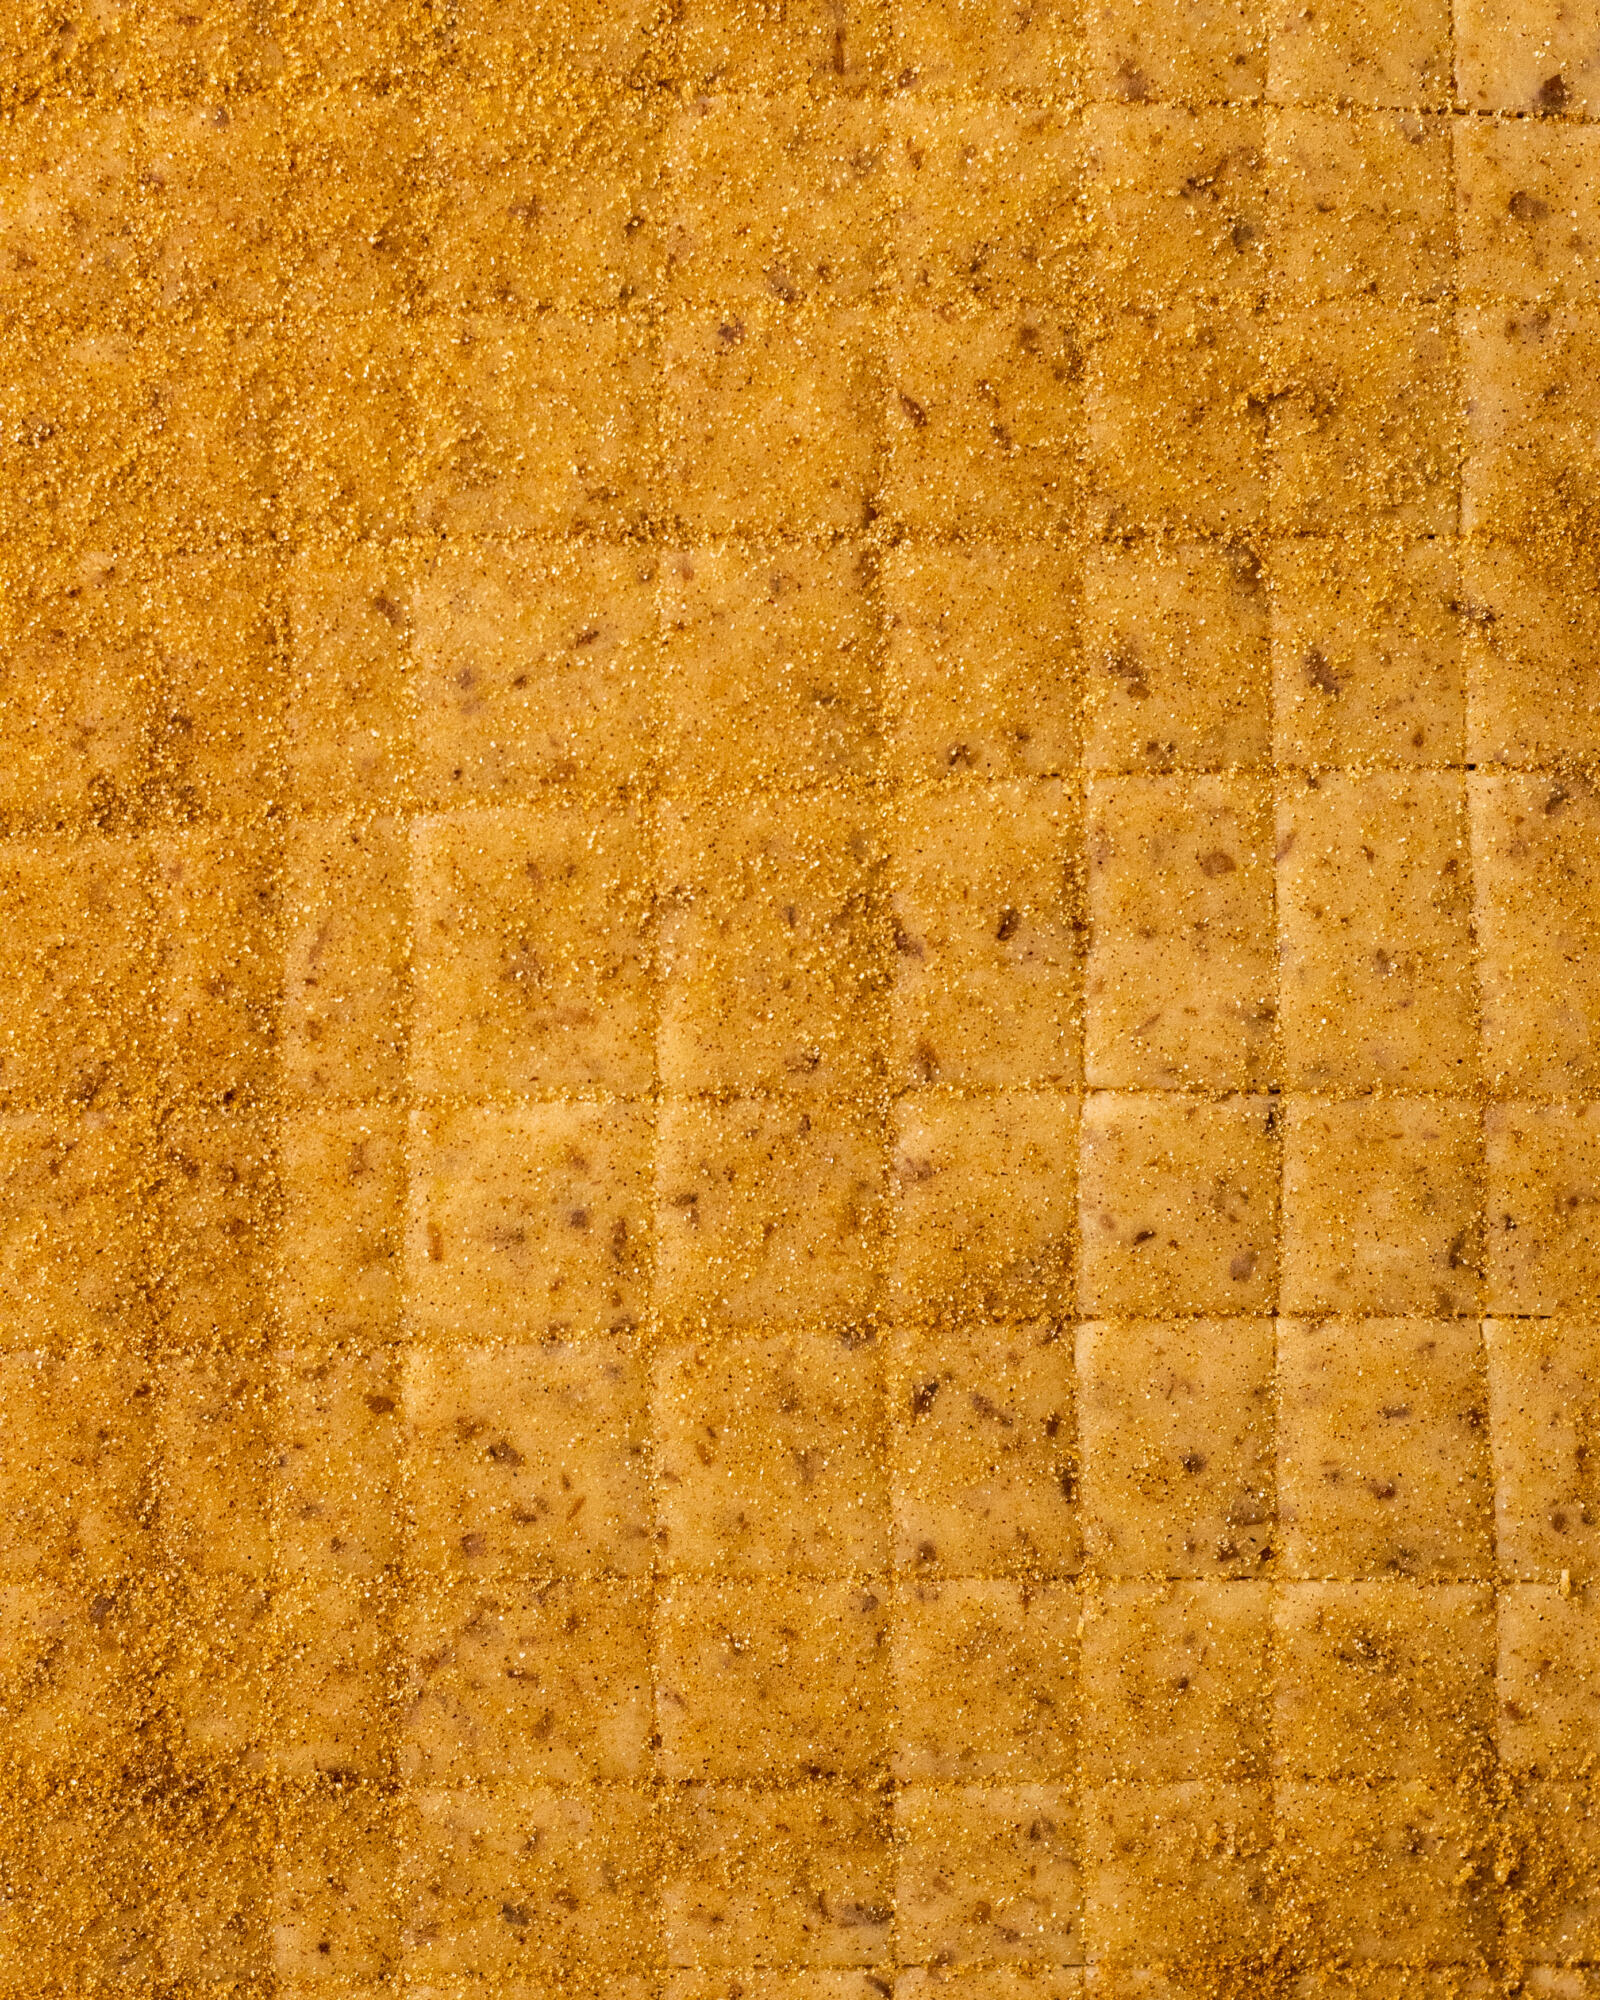 cereal dough cut into squares close up